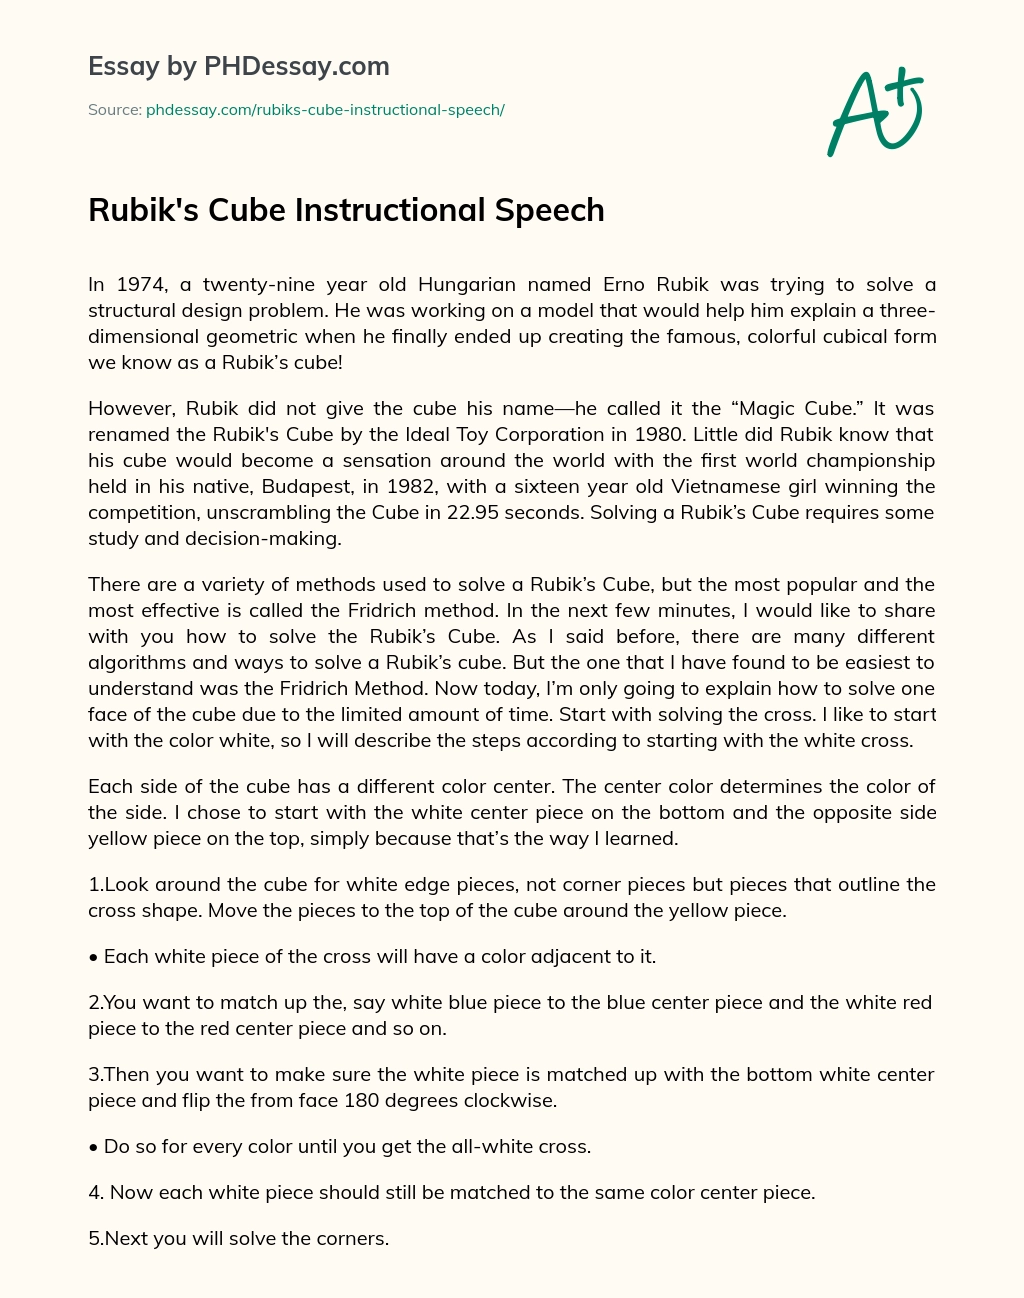 Rubik’s Cube Instructional Speech essay